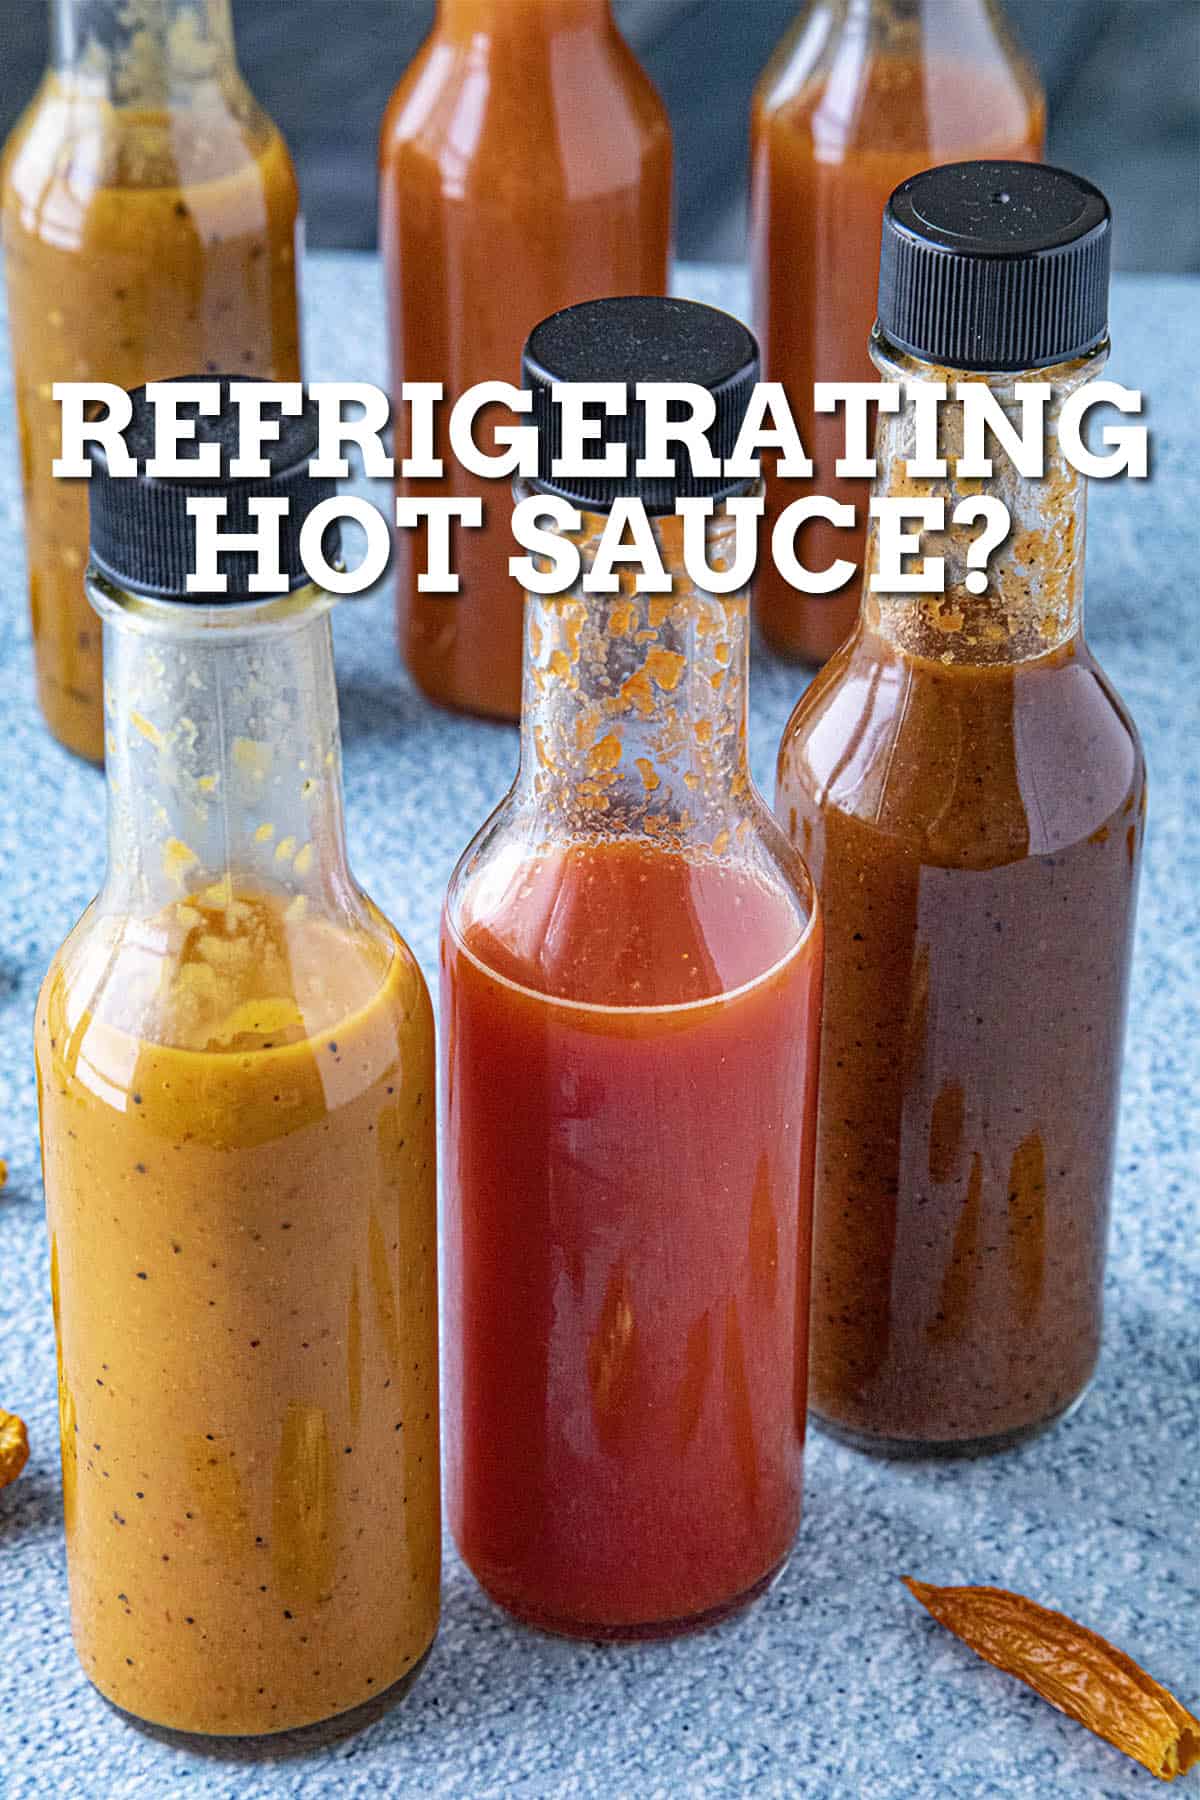 Should I Refrigerate Hot Sauce?